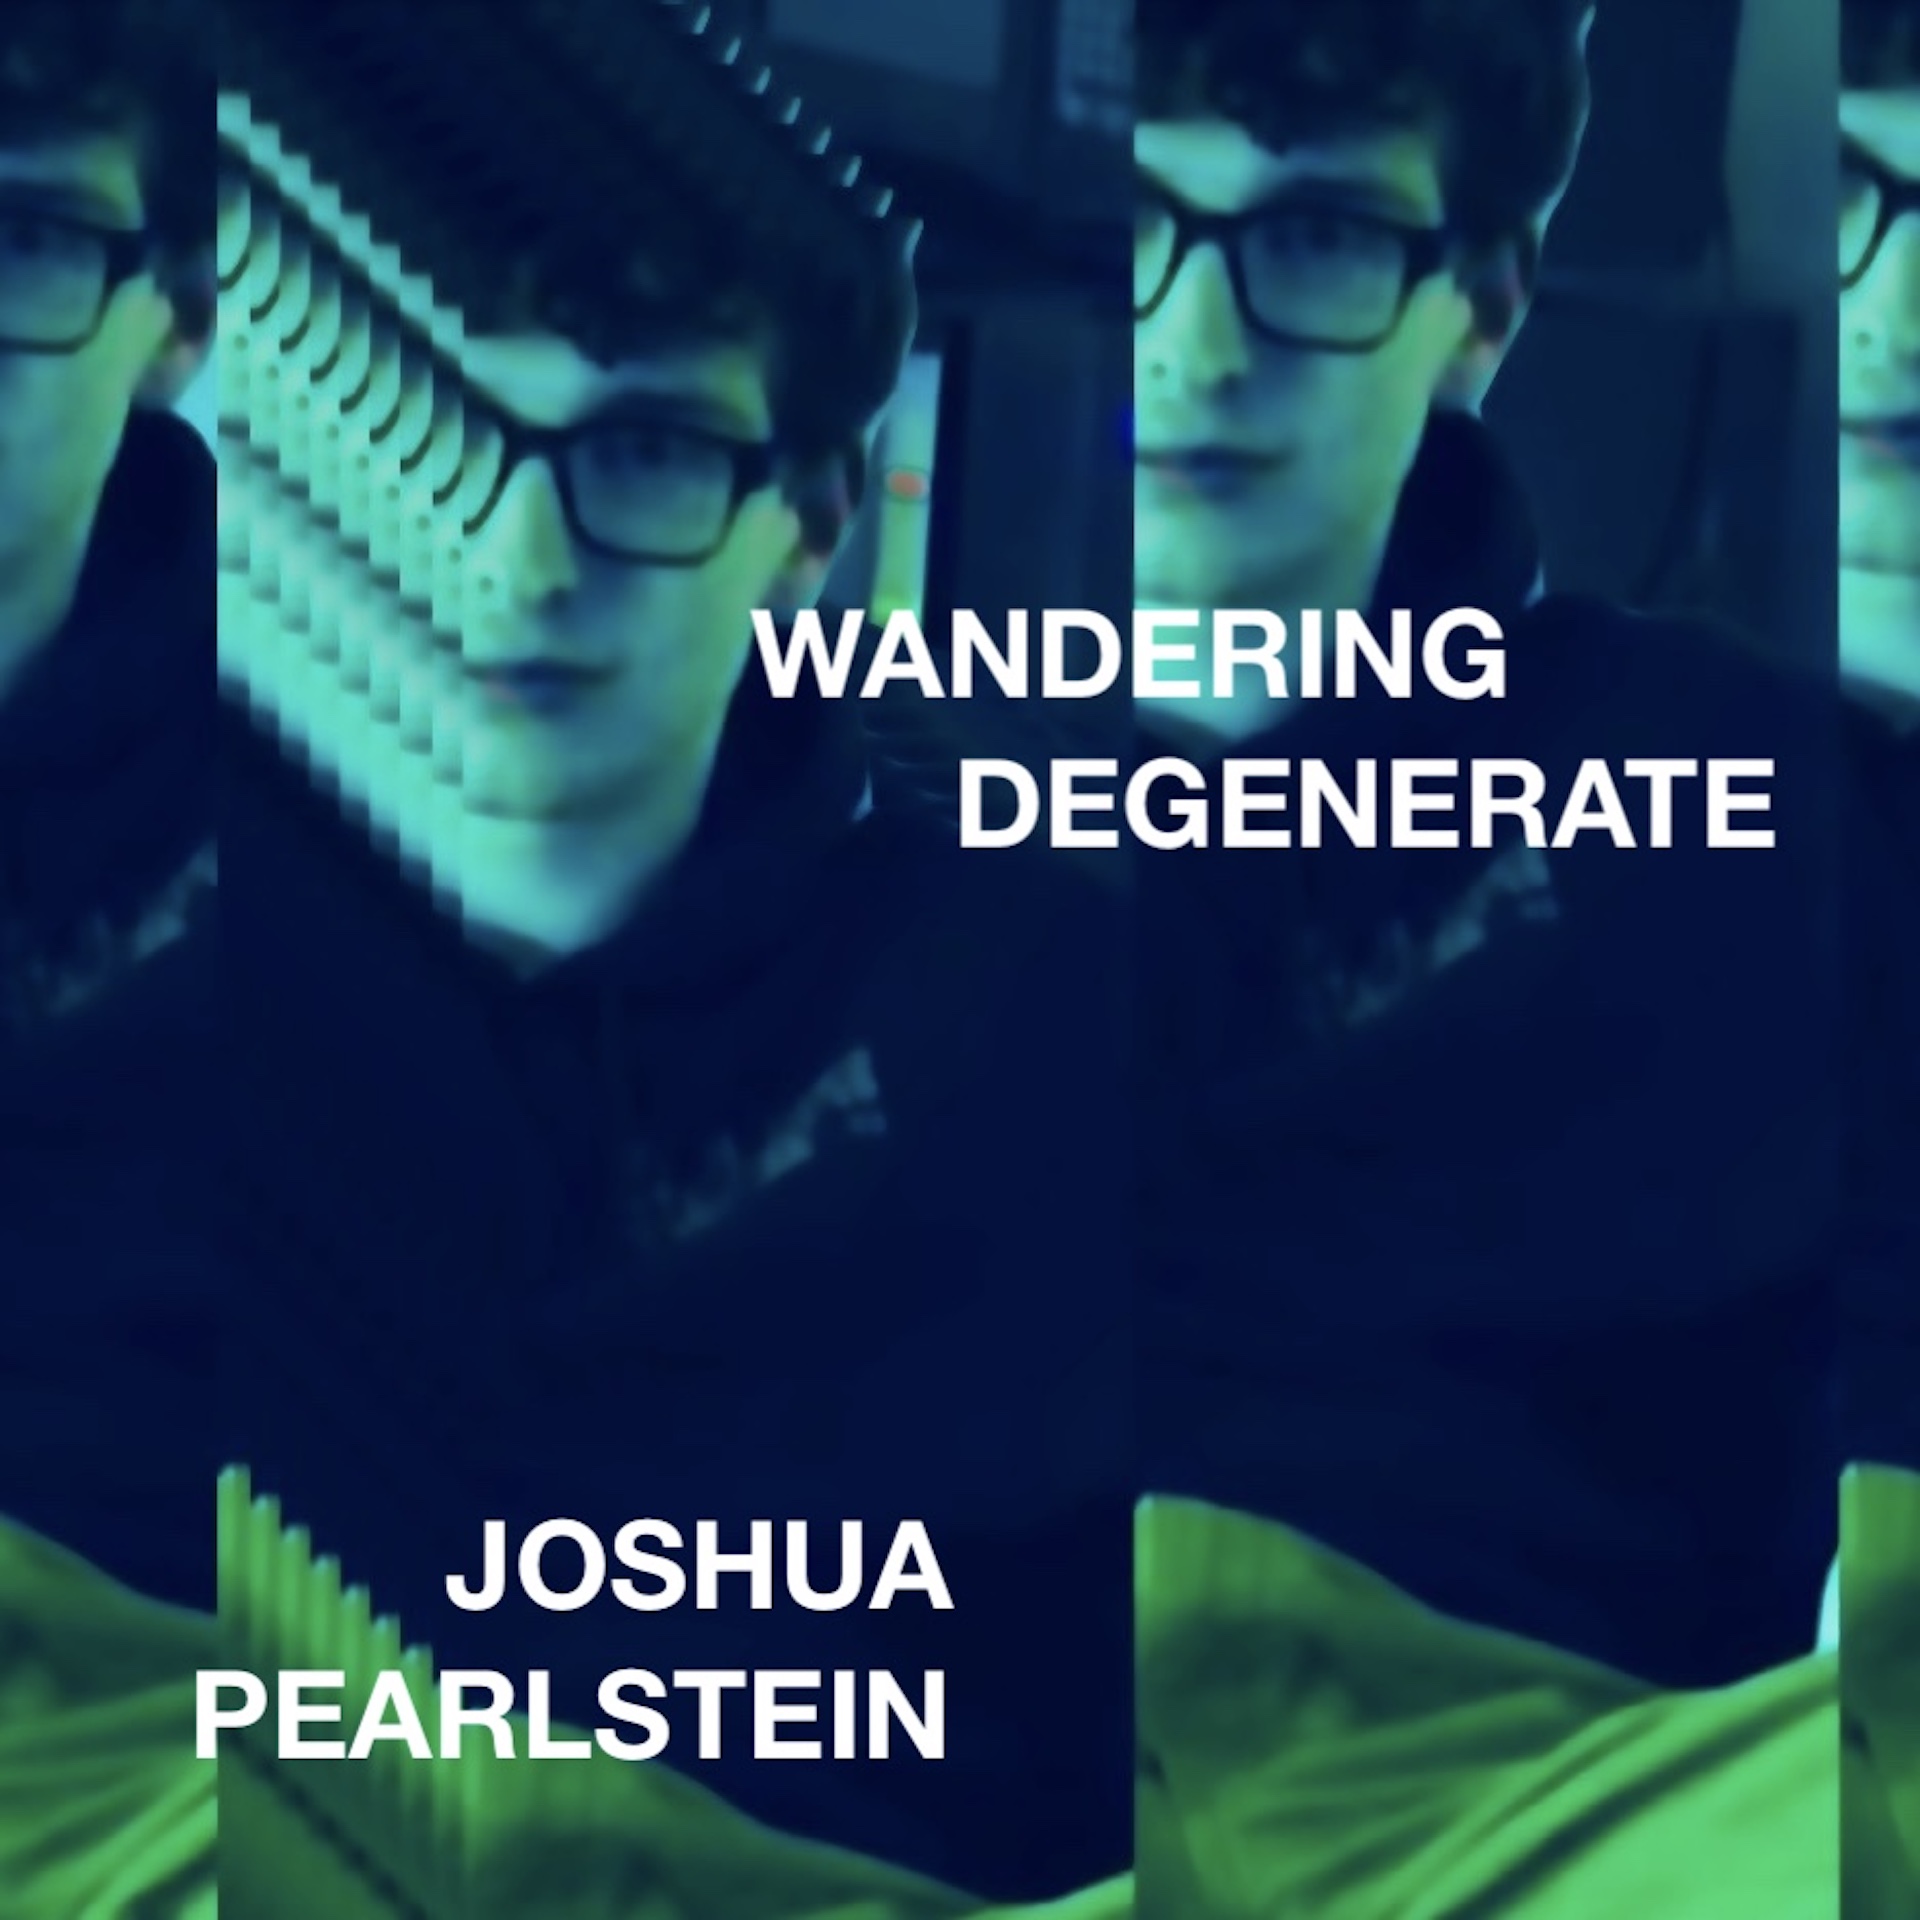 Joshua Pearlstein – “Wandering Degenerate”